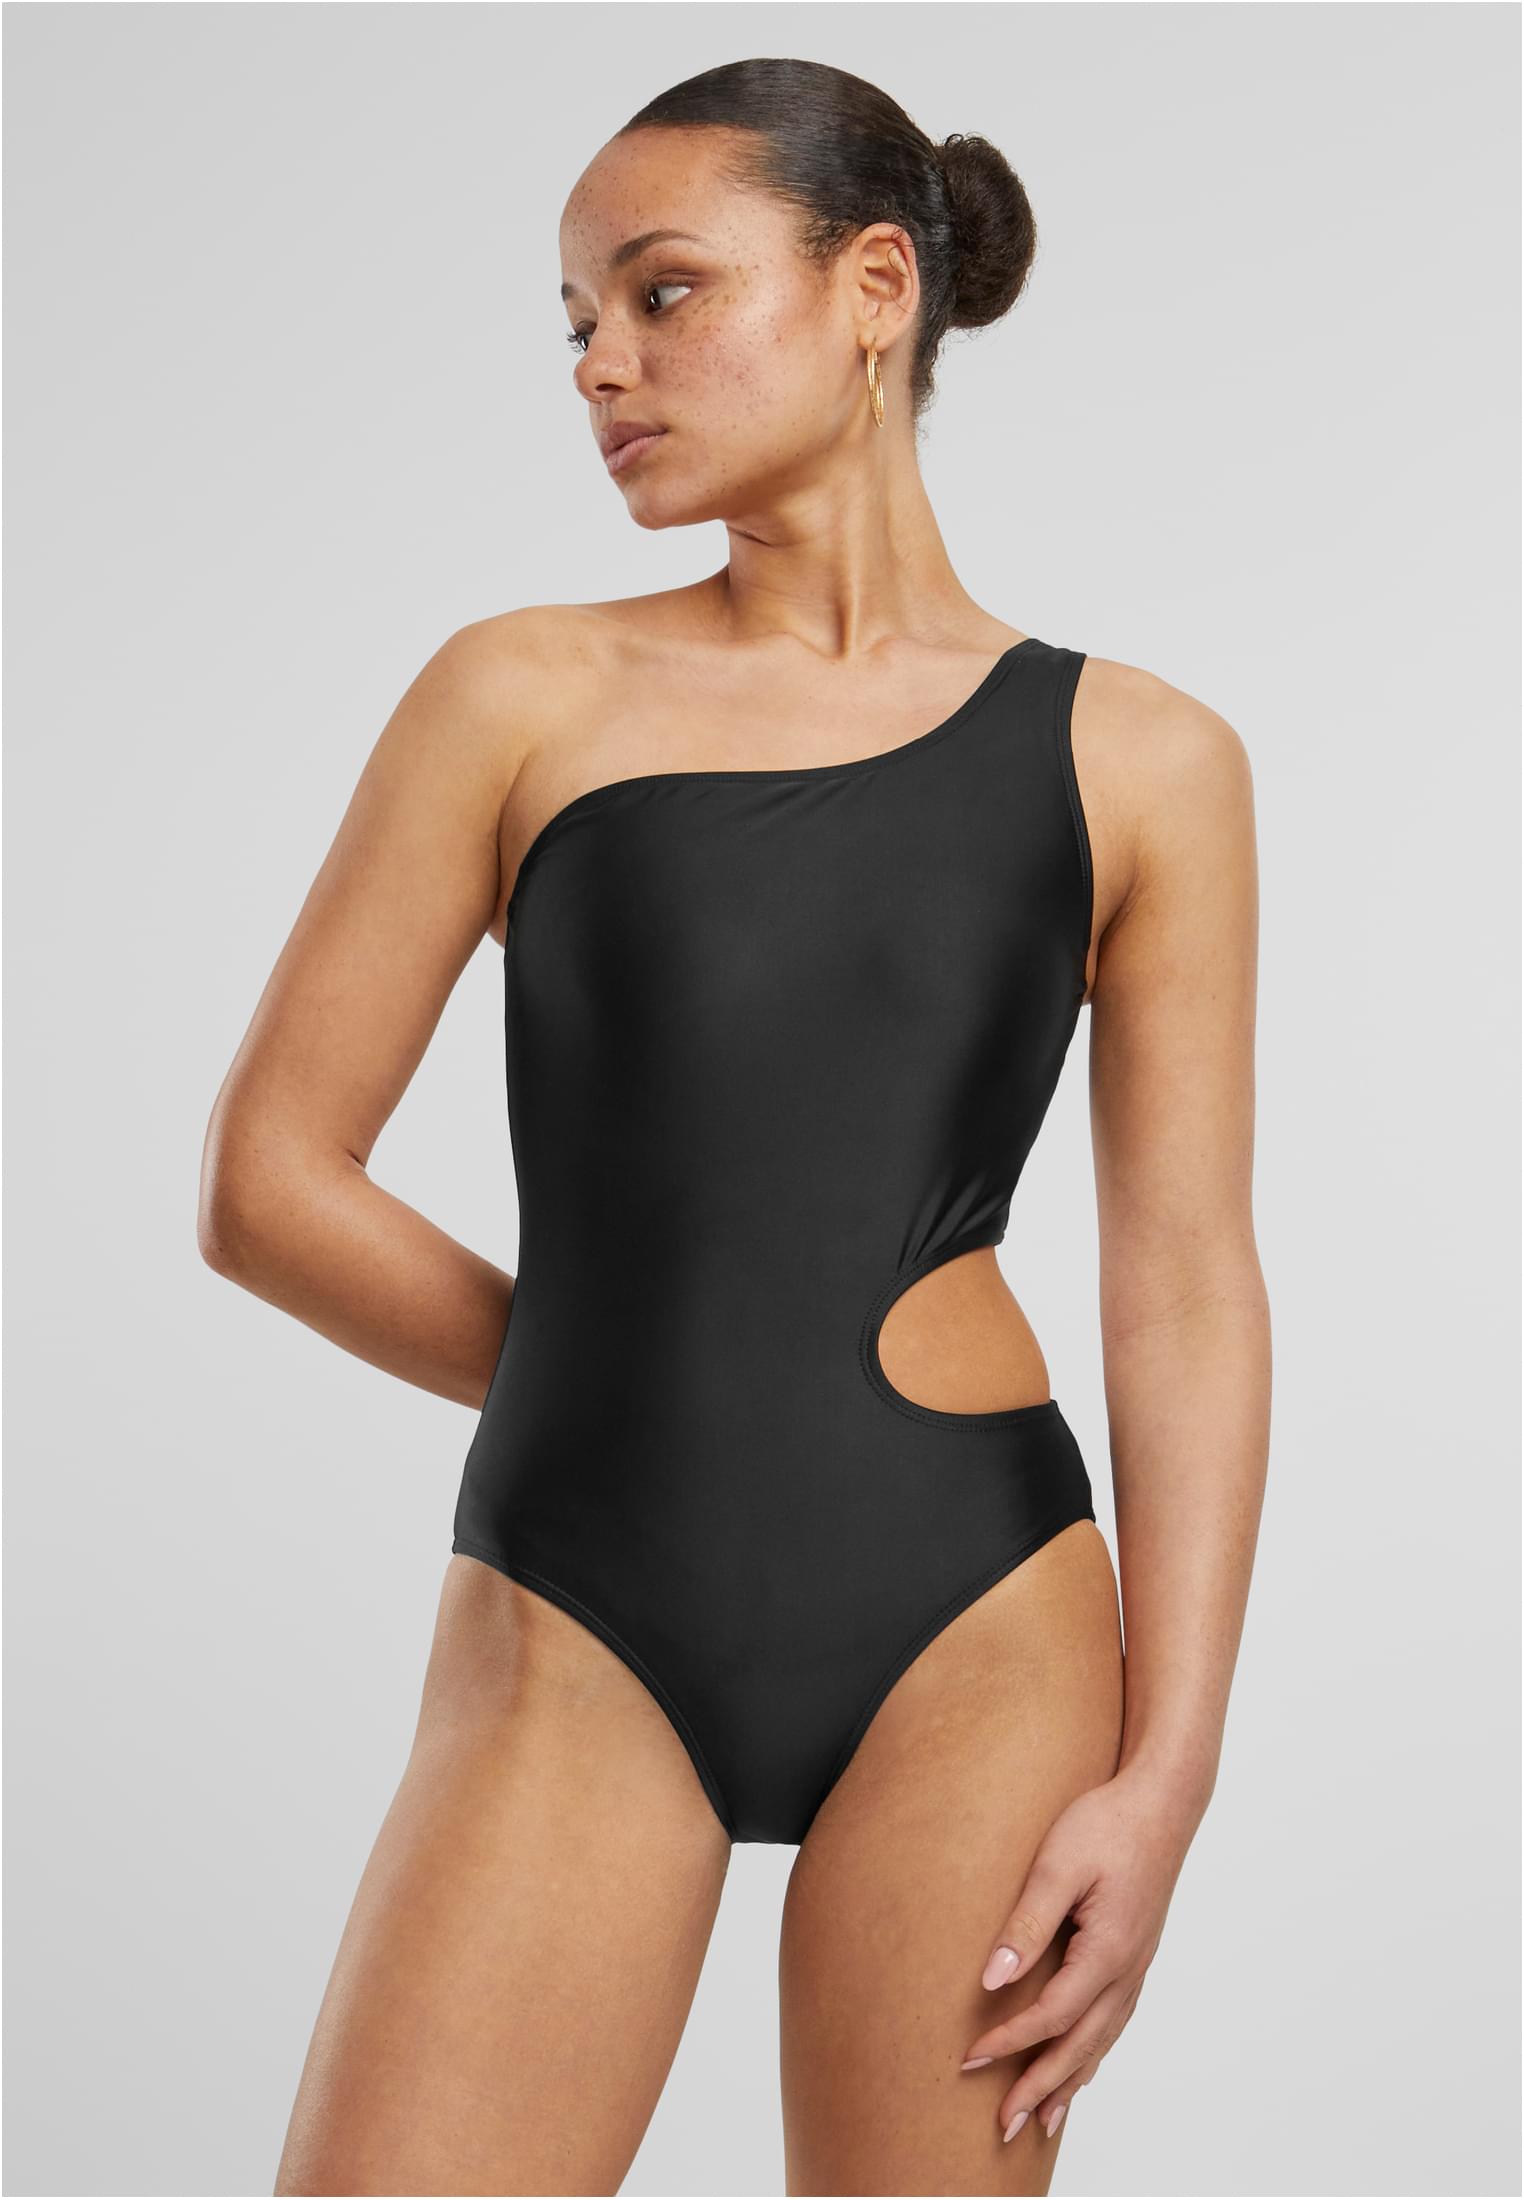 Women's Asymmetrical Cut Out Swimsuit - Black